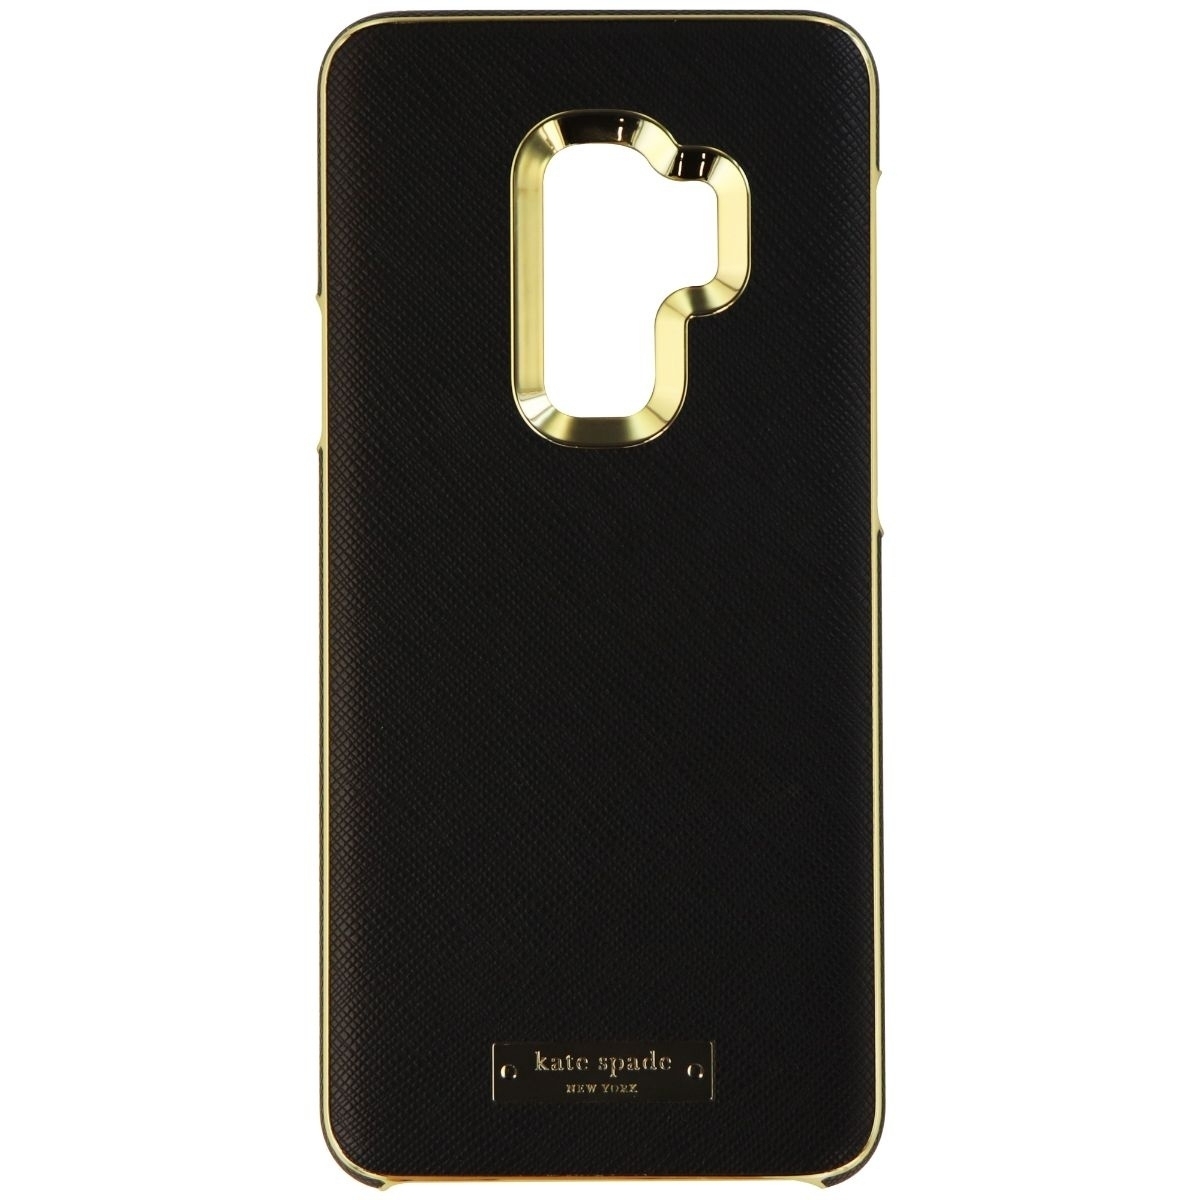 Kate Spade Wrap Series Hard Case For Galaxy S9+ (Plus) - Black Saffiano/Gold